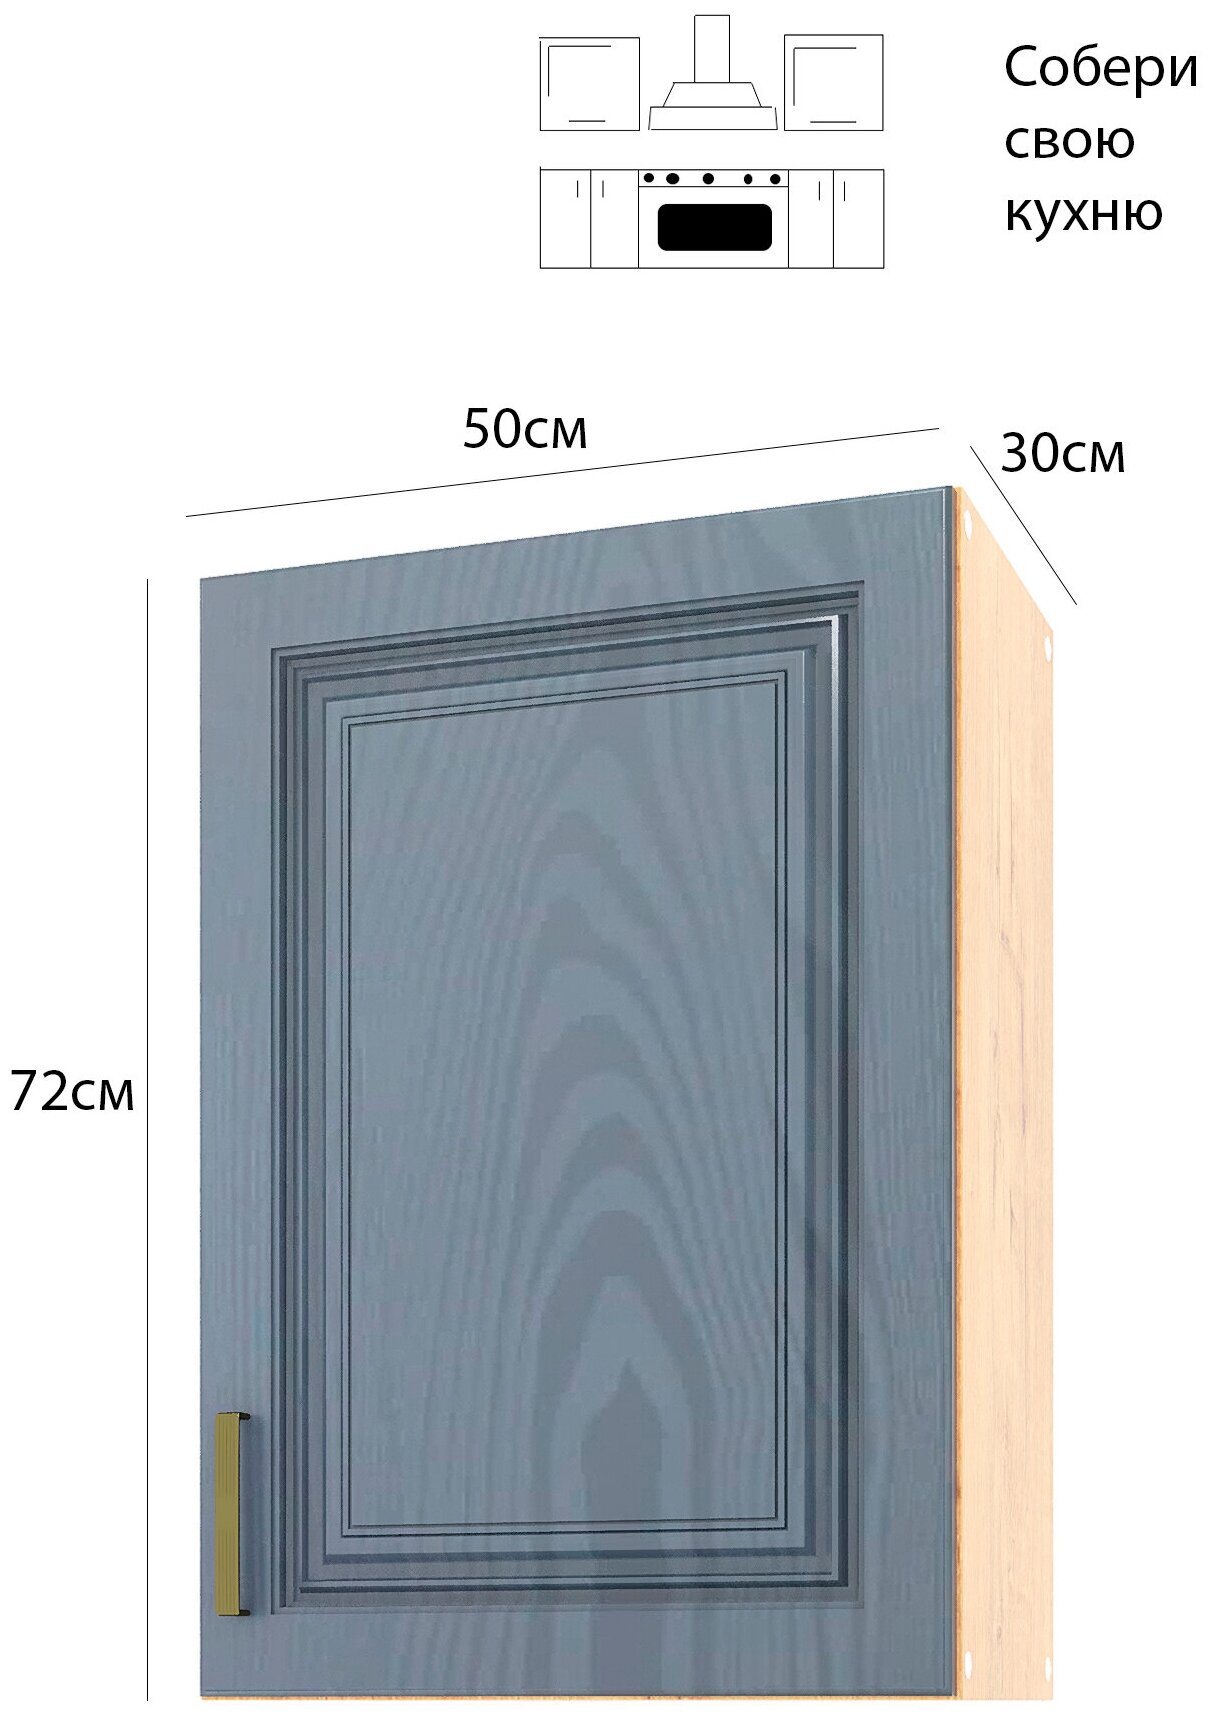 EVITAmeb/ Модуль кухонный шкаф 50 фасад МДФ с фрезеровкой графит / шкафы для кухни / шкафы навесные / шкаф кухонный / кухонный гарнитур